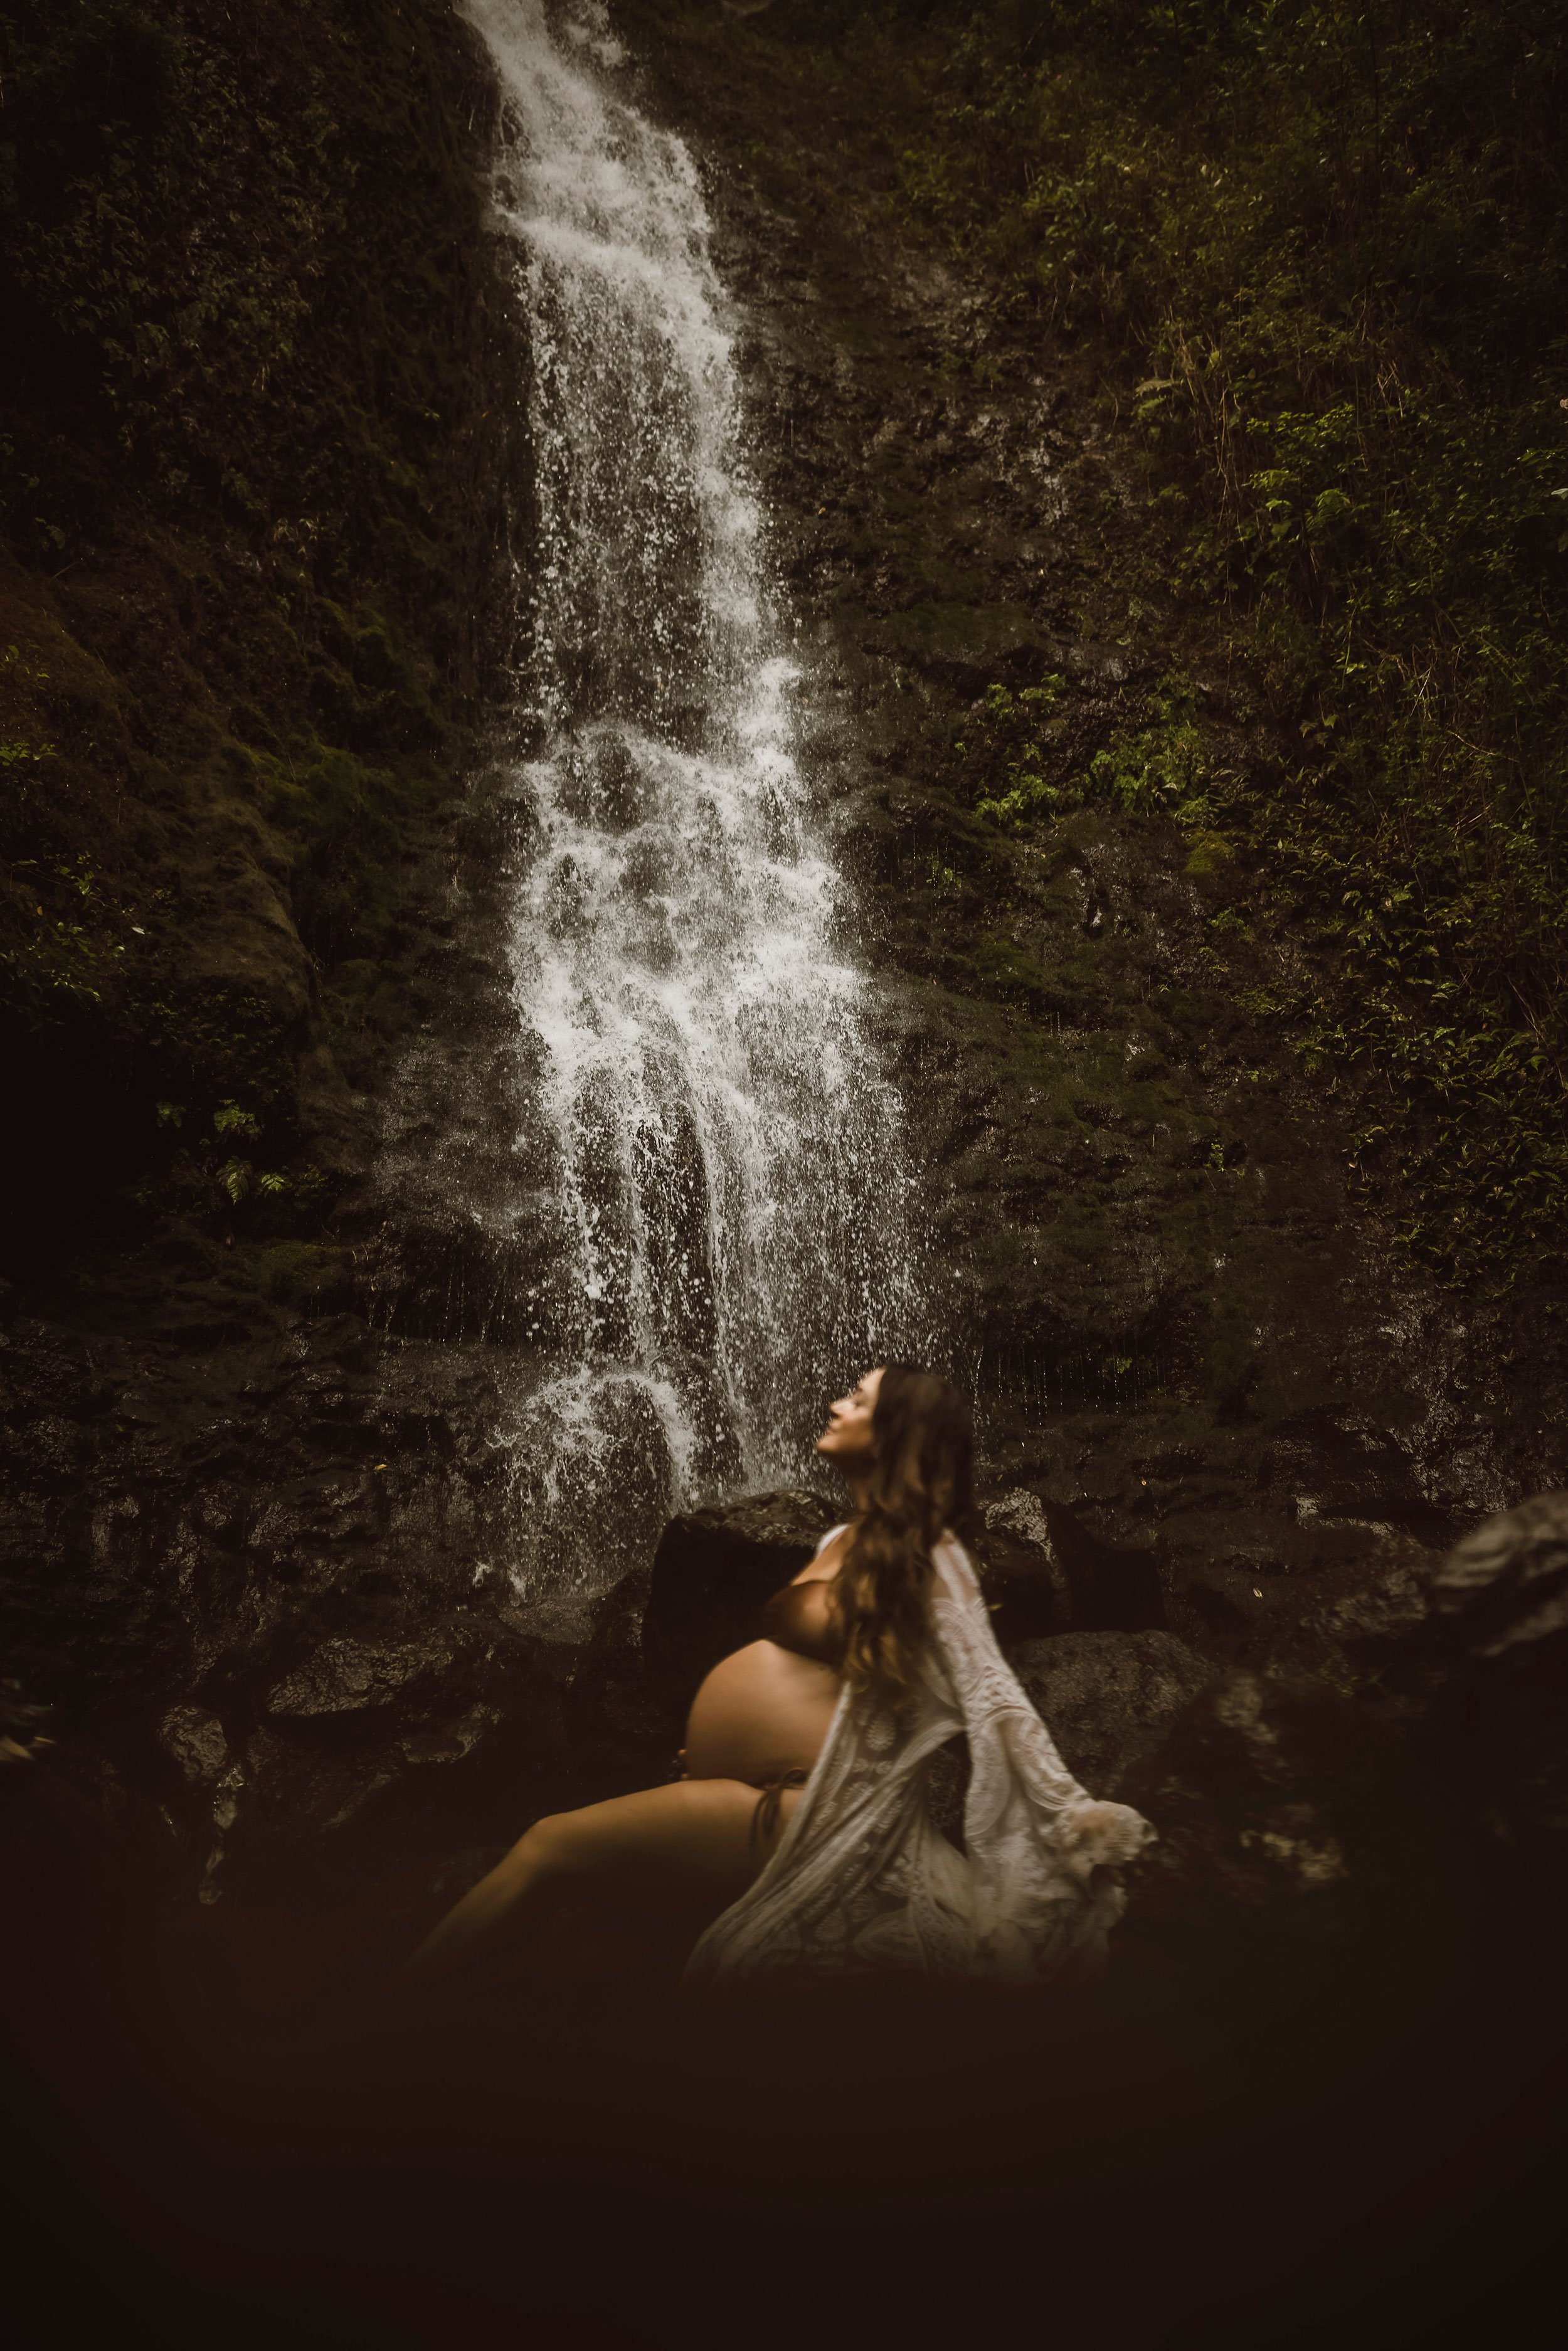 oahu-hawaii-waterfall-maternity-photos-lulumahu-09.jpg